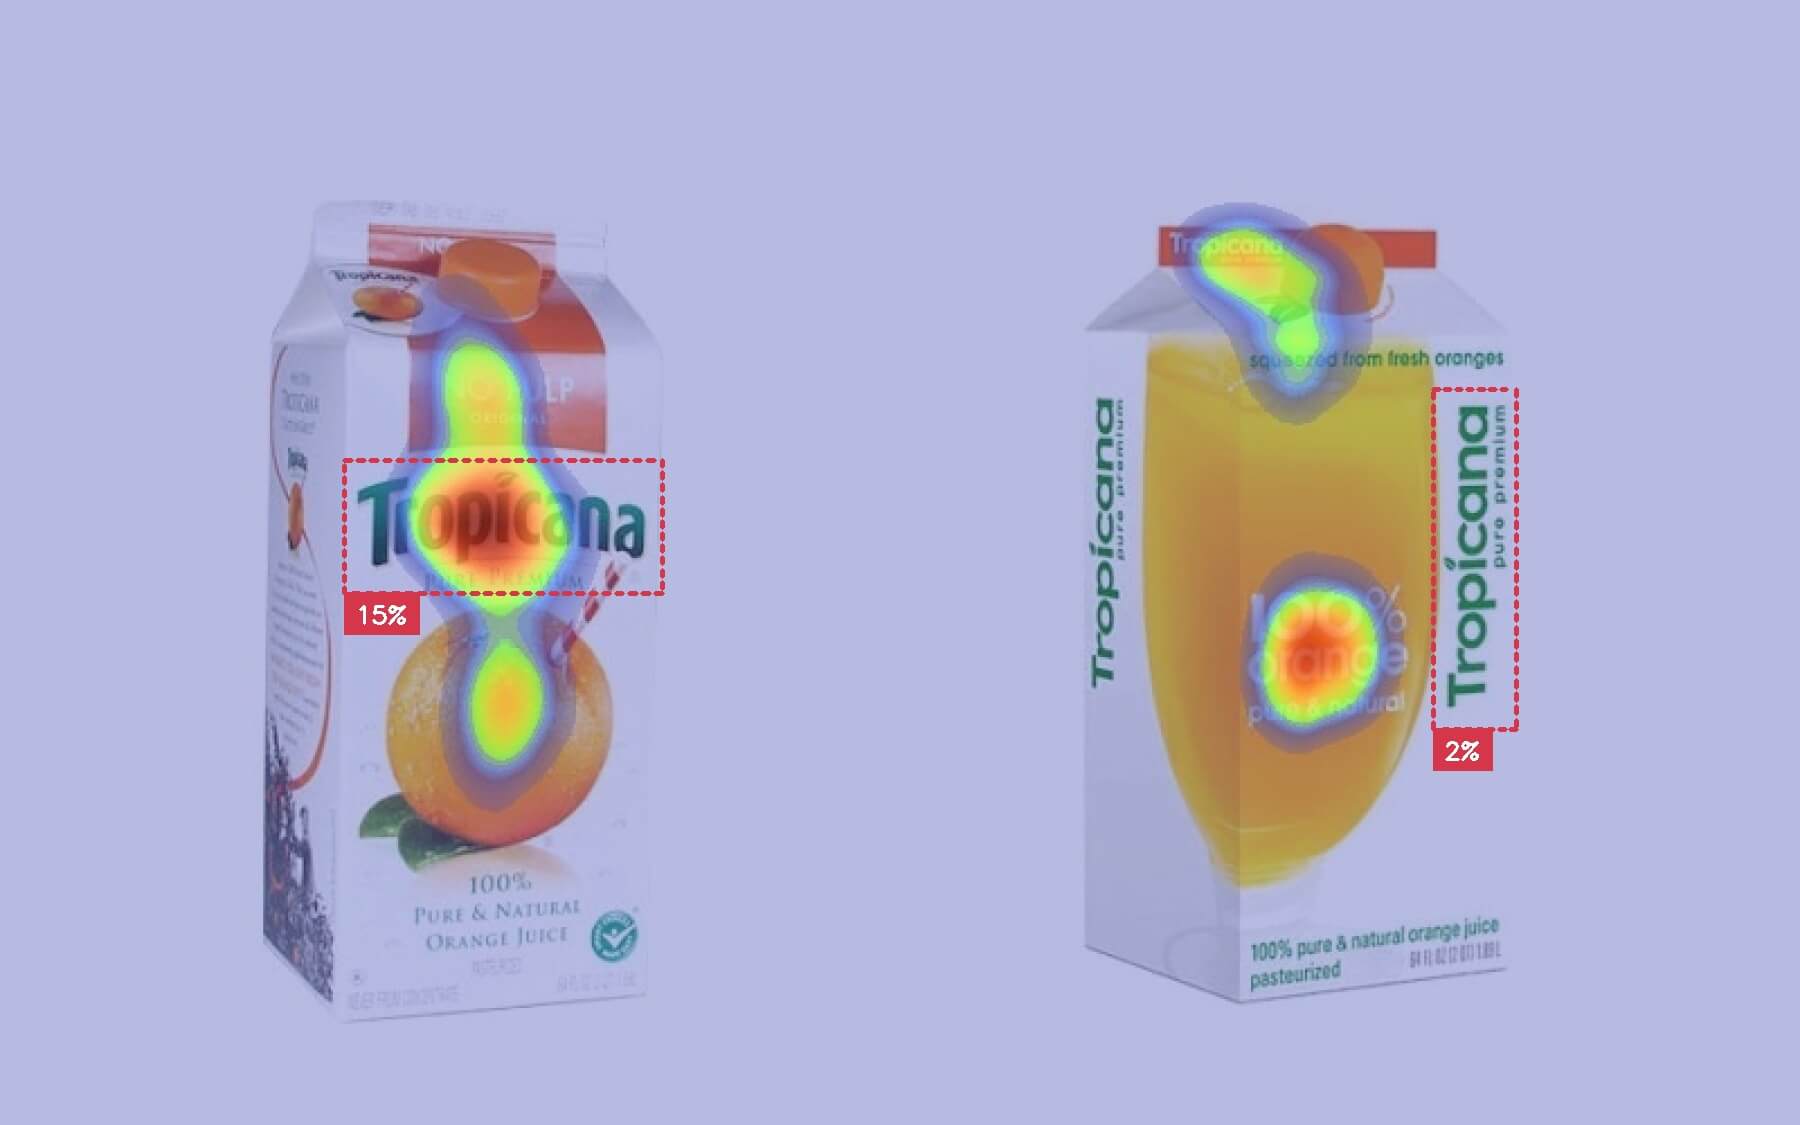 Tropicana packaging heatmaps